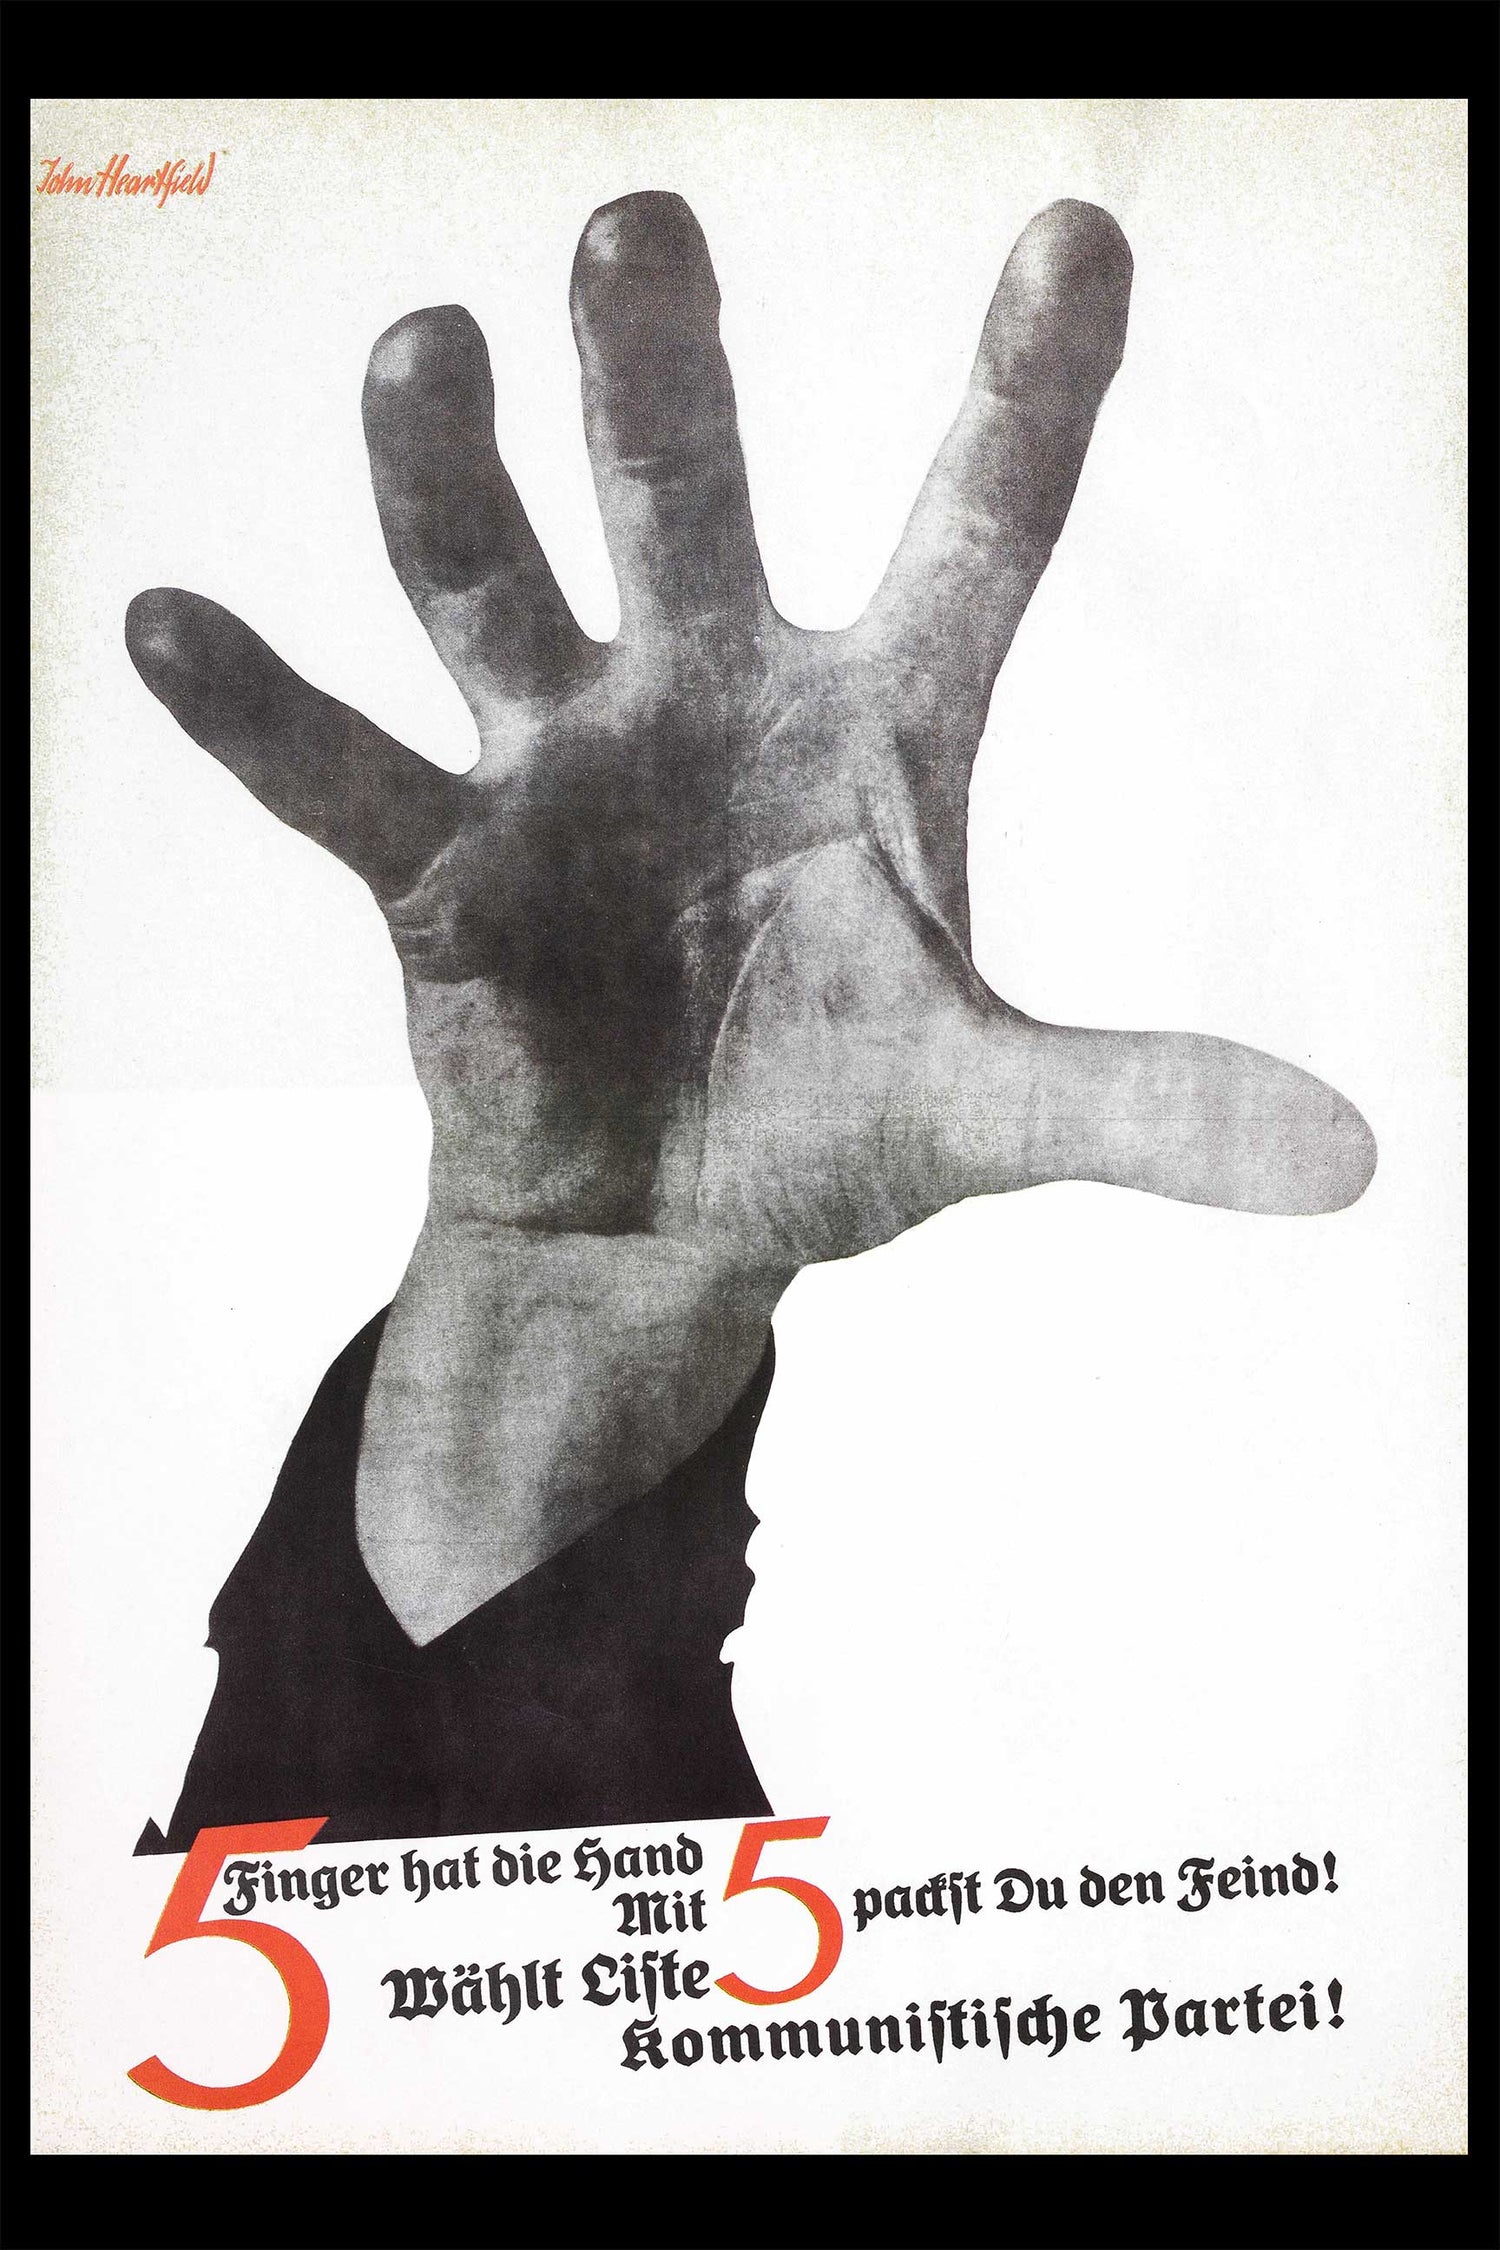 famous political art poster sale. buy john heartfield 5 fingers hand poster.